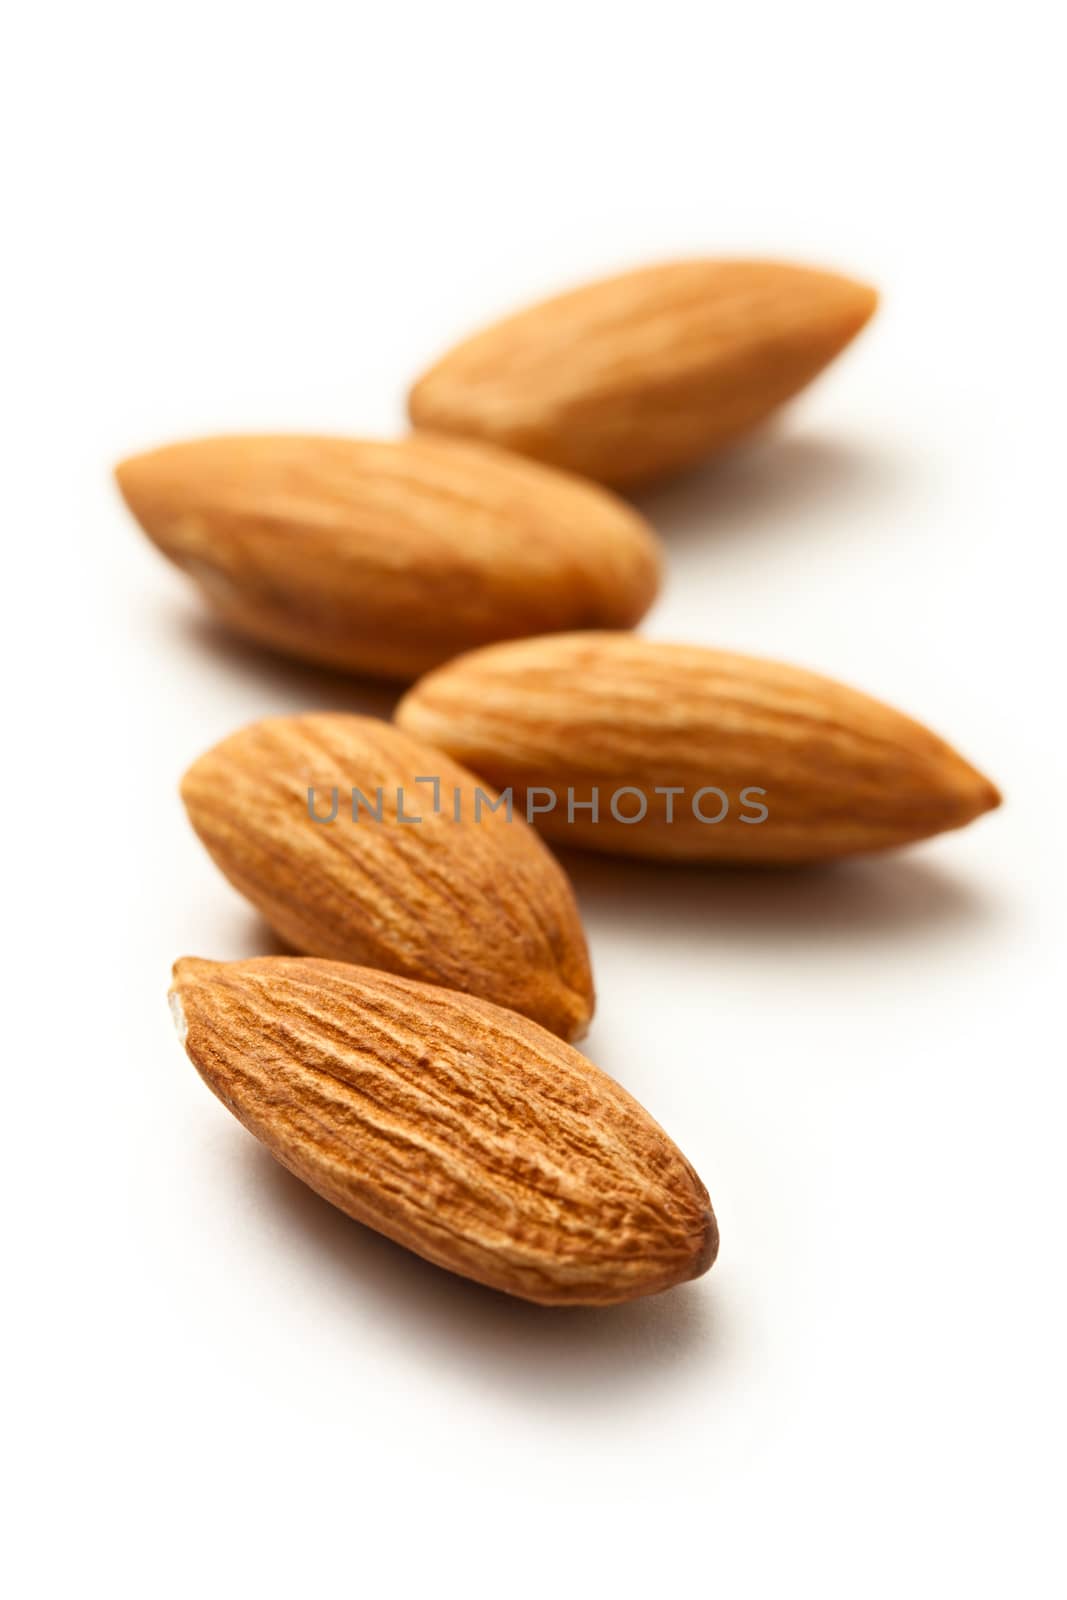 Almonds on the white background by Garsya